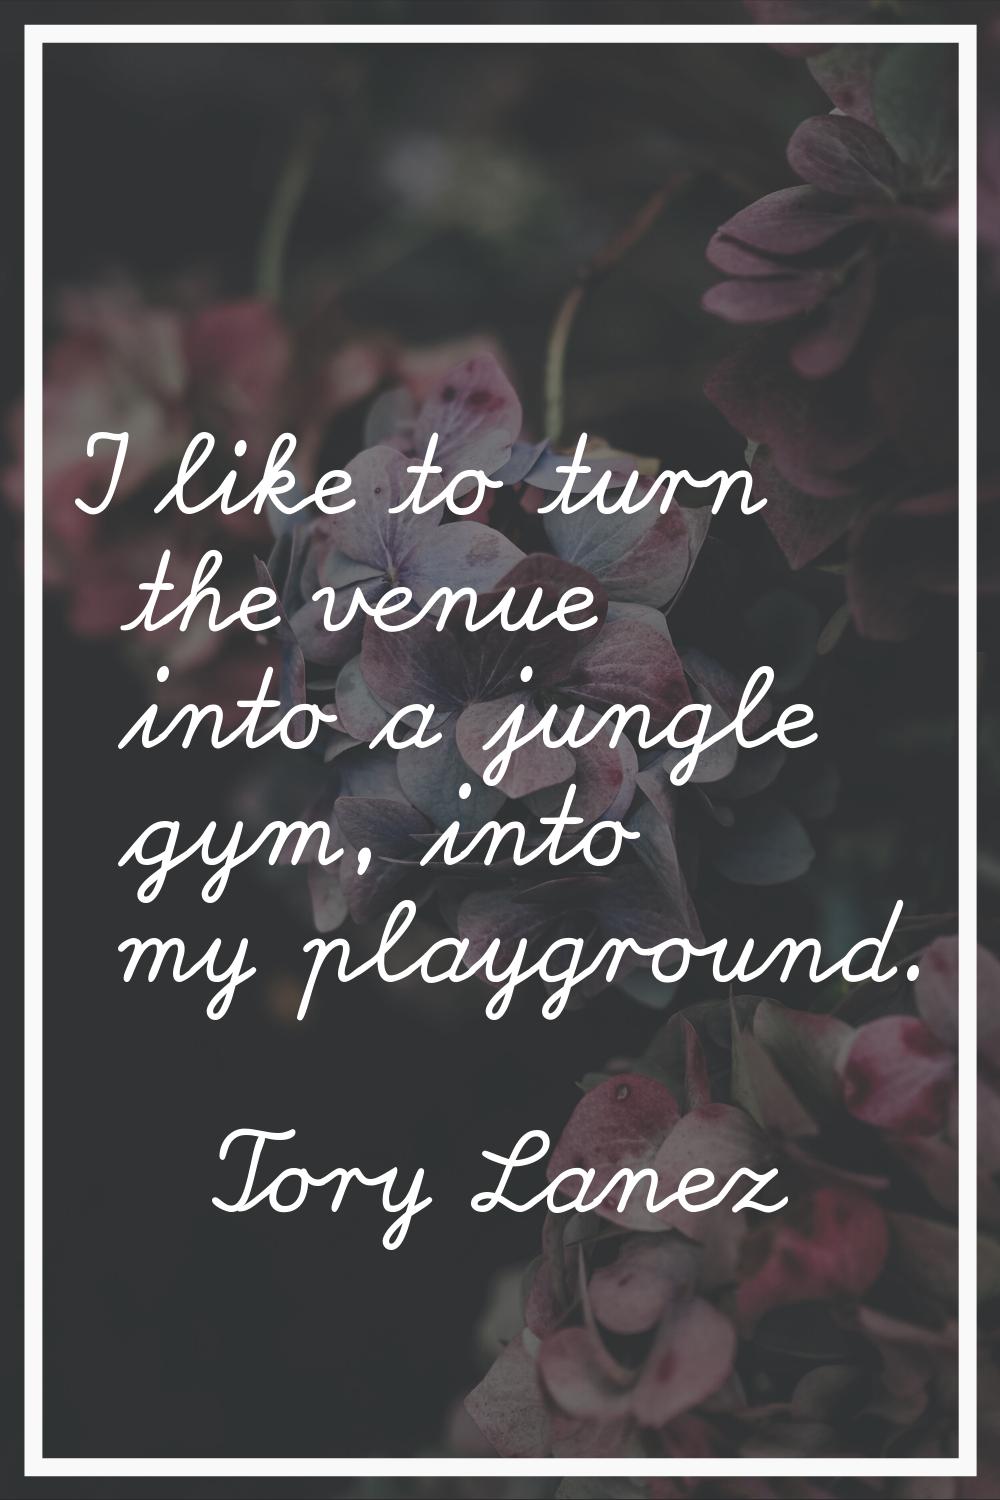 I like to turn the venue into a jungle gym, into my playground.